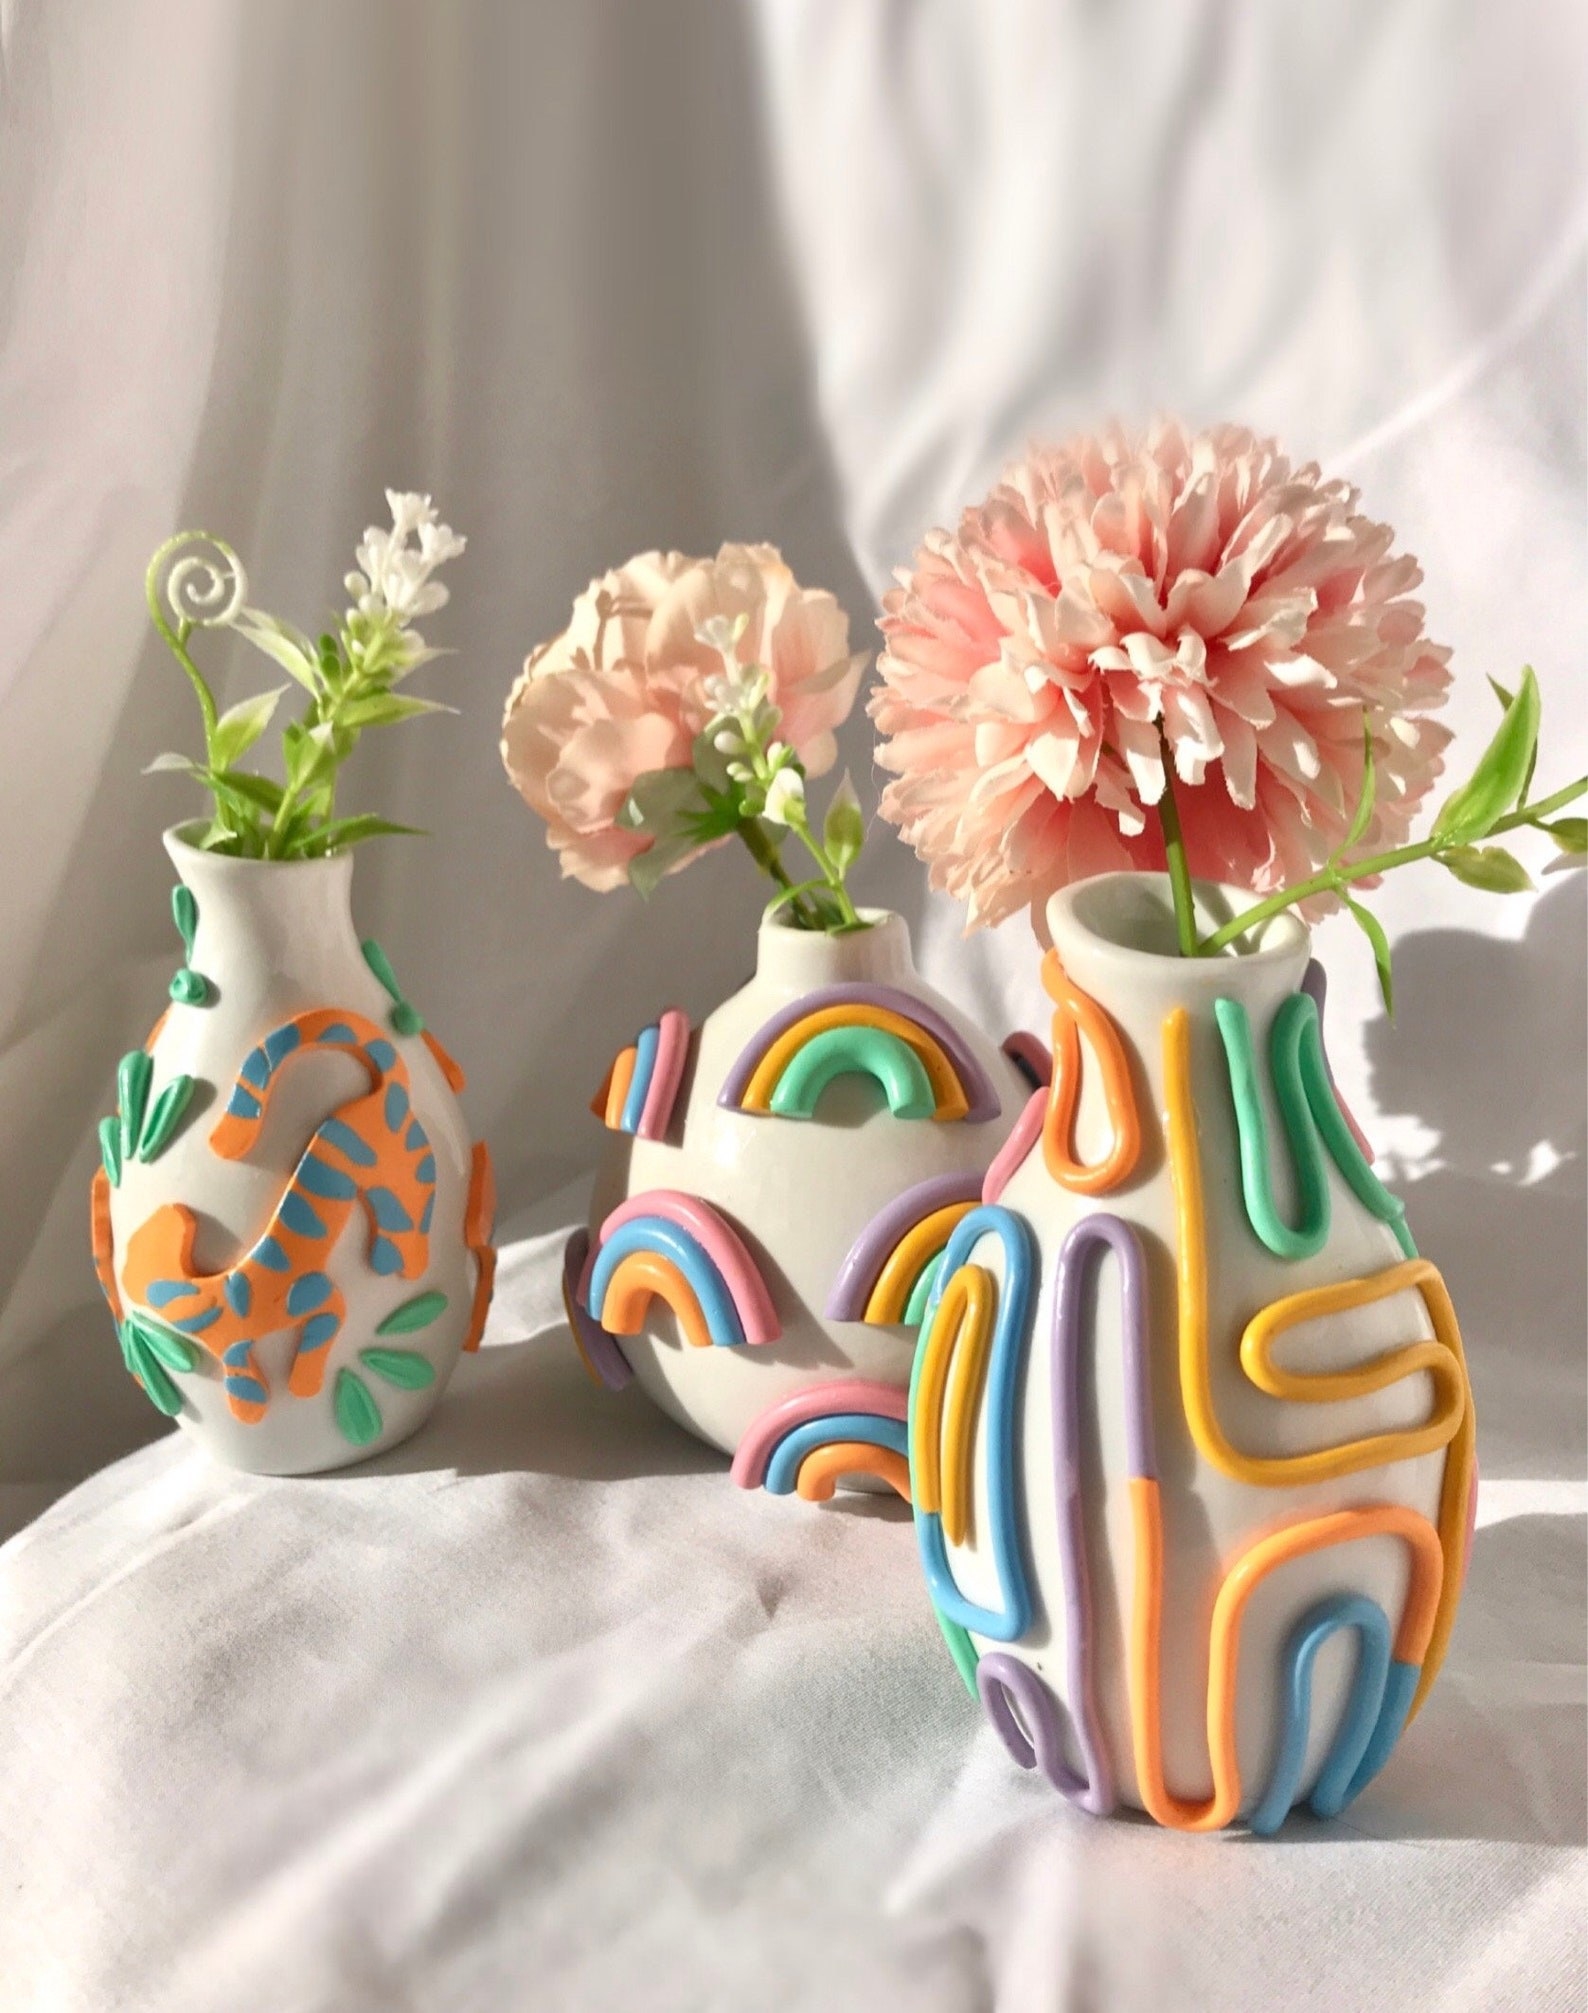 Boho vases.2 Piece Little White Vase Set Friendship Sweet Gift a Message of Love Ceramic Table Vases Garlic Shape Set B Small Bud Vases